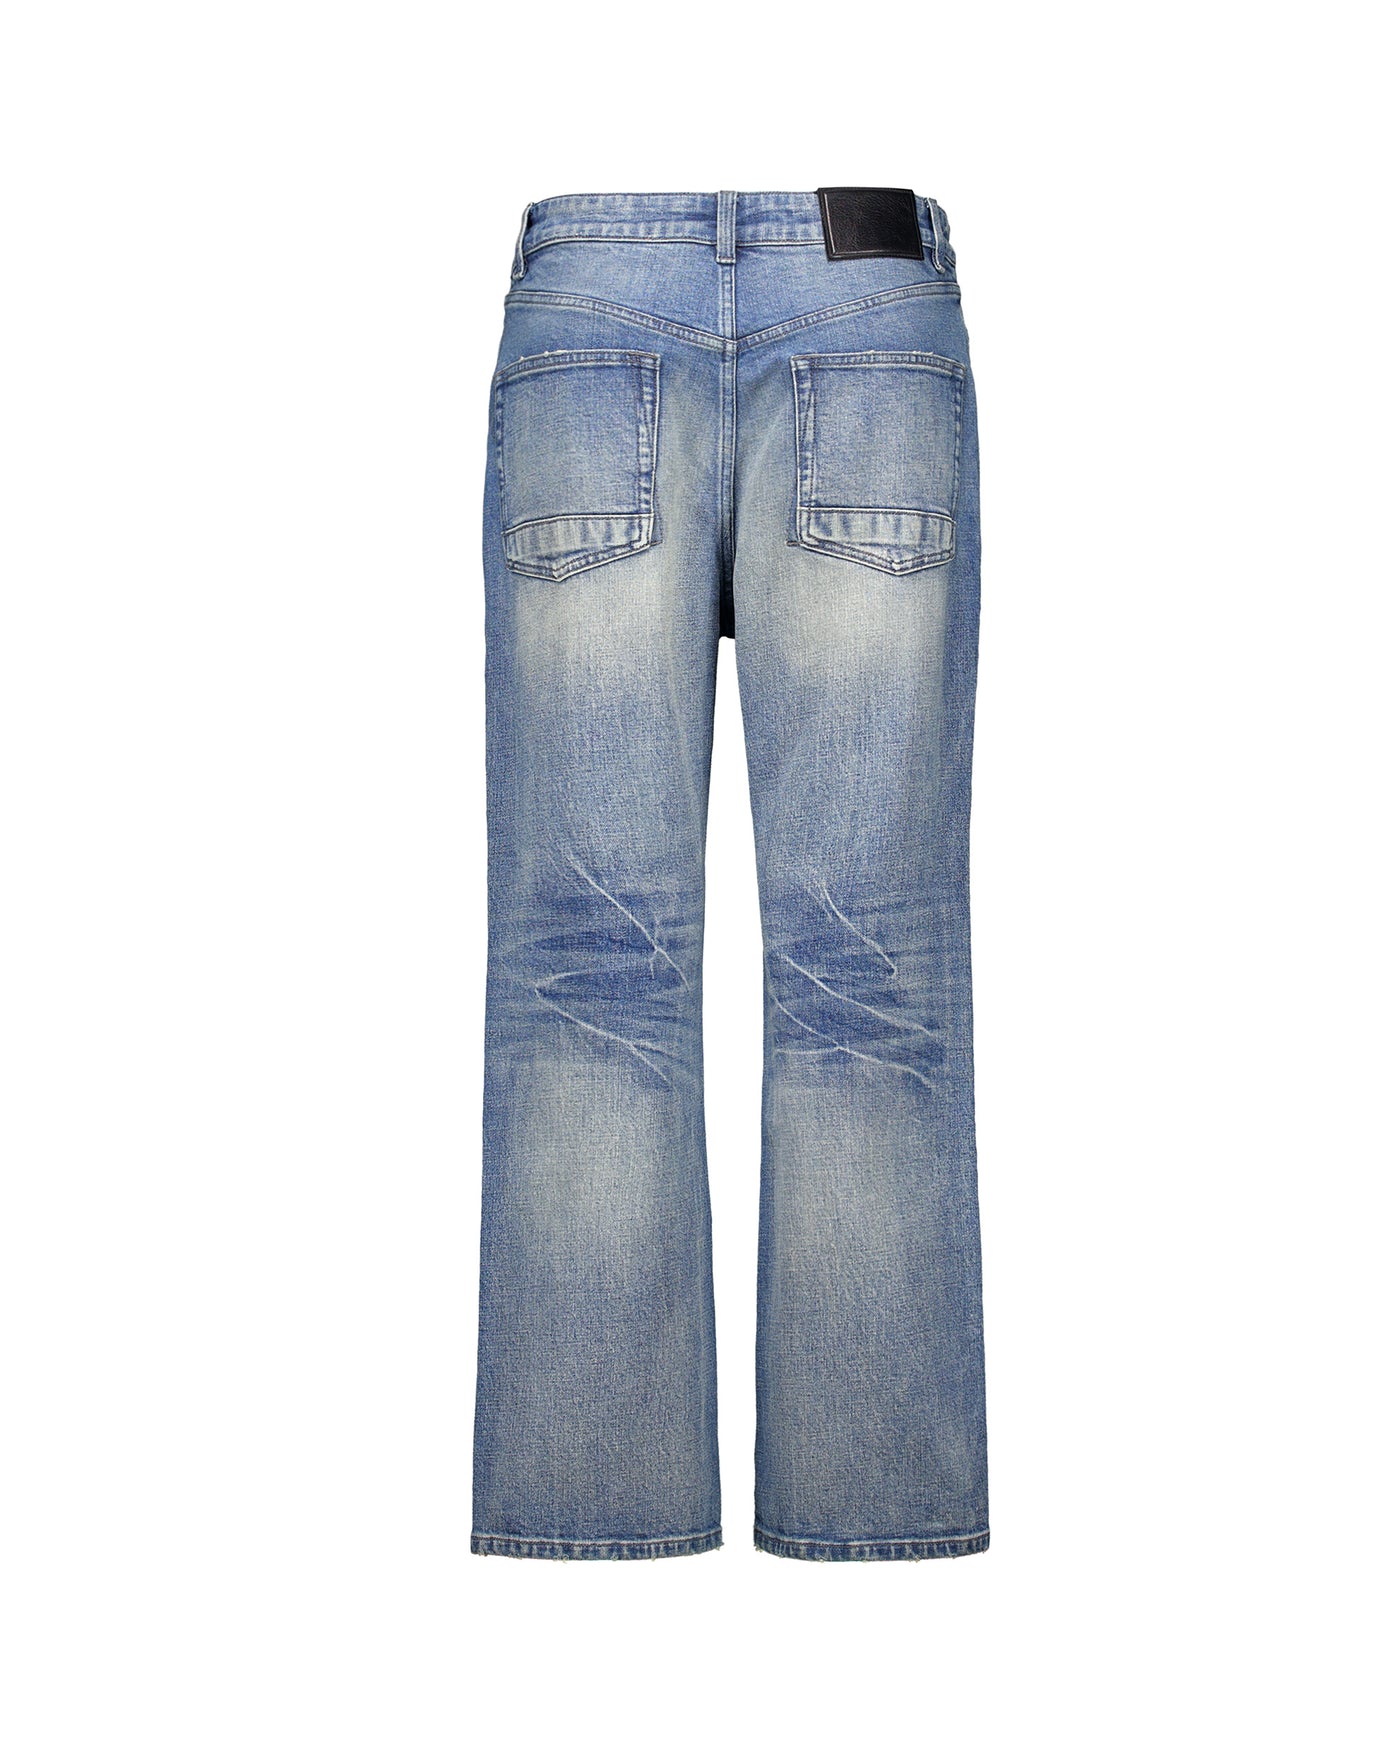 “333” Wash straight leg jeans